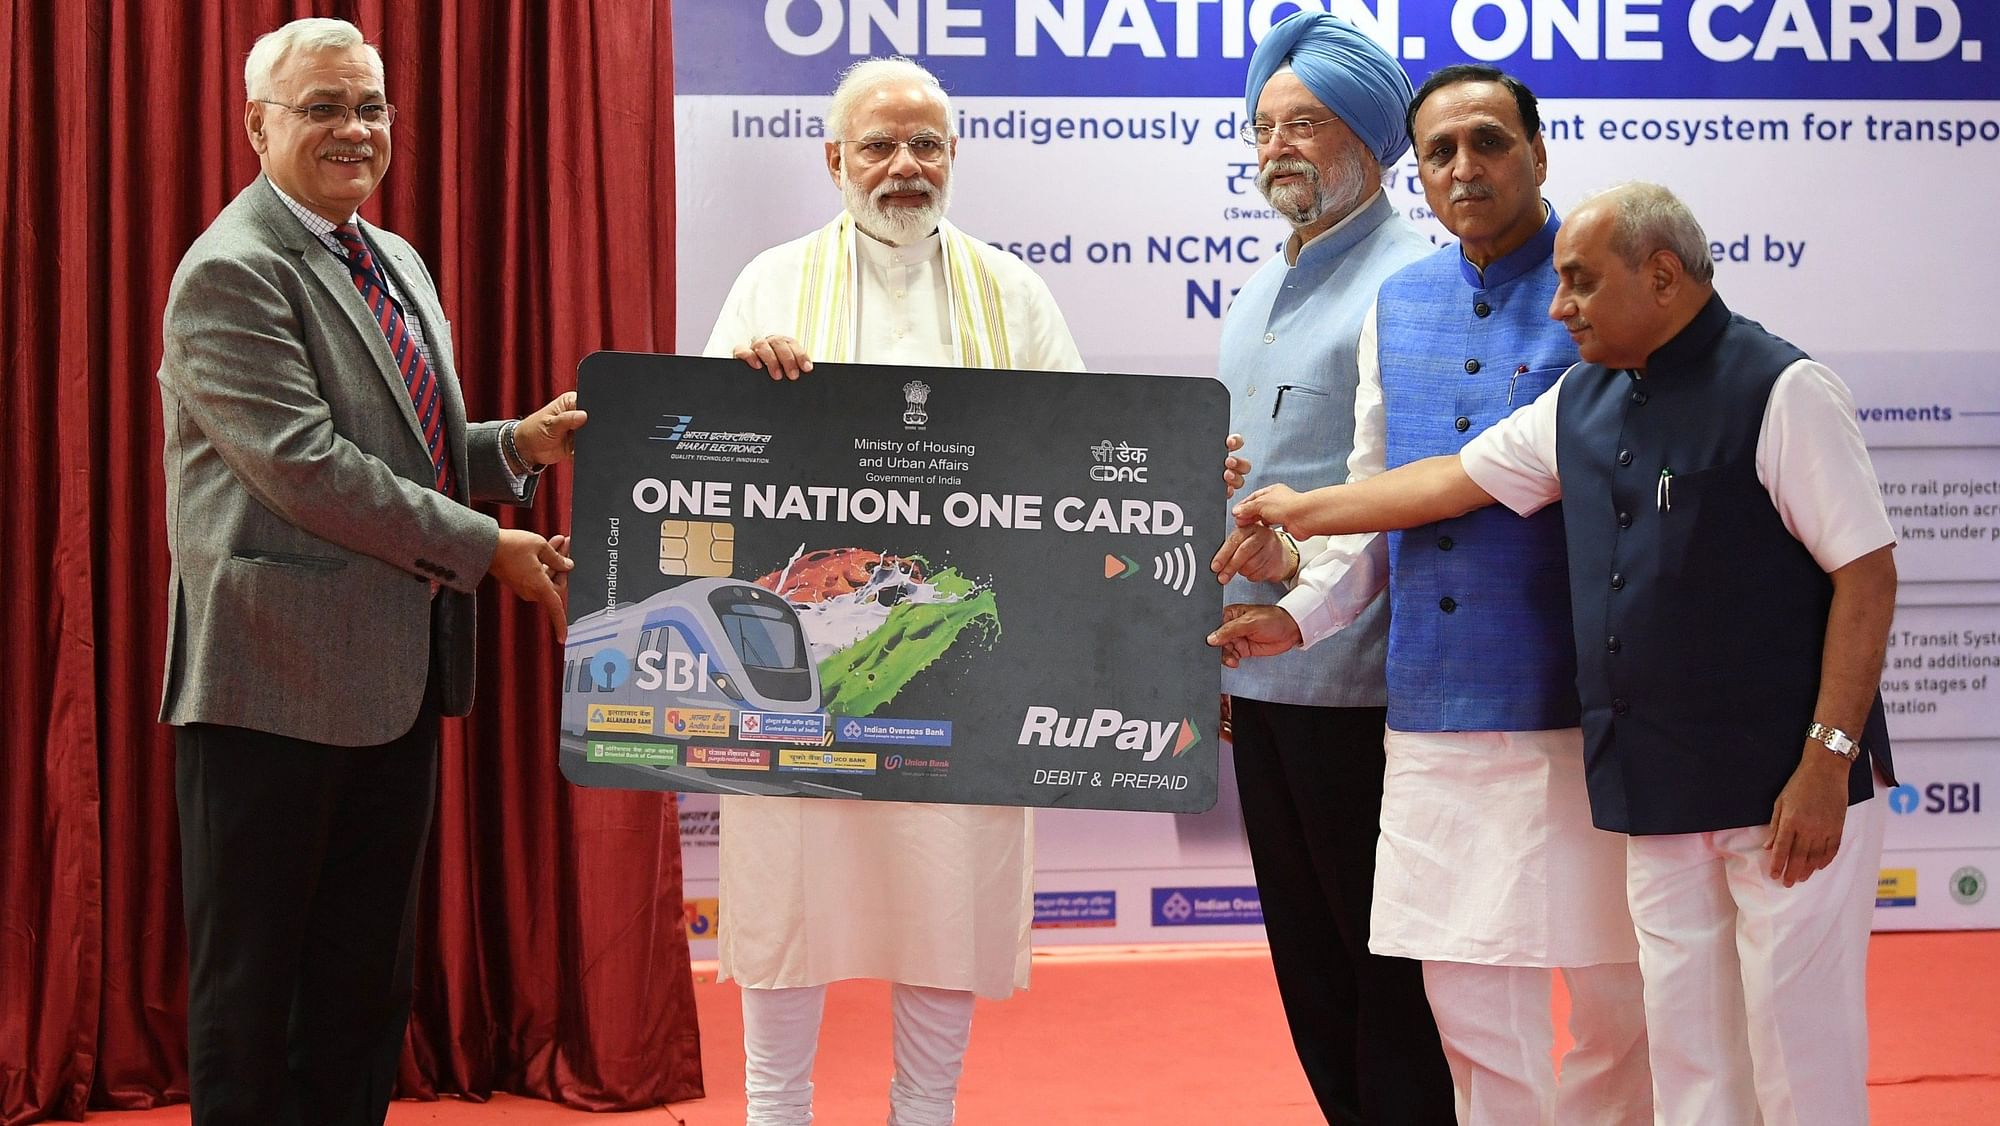 Prime Minister Narendra Modi launched the smart card on 4 March in Delhi.